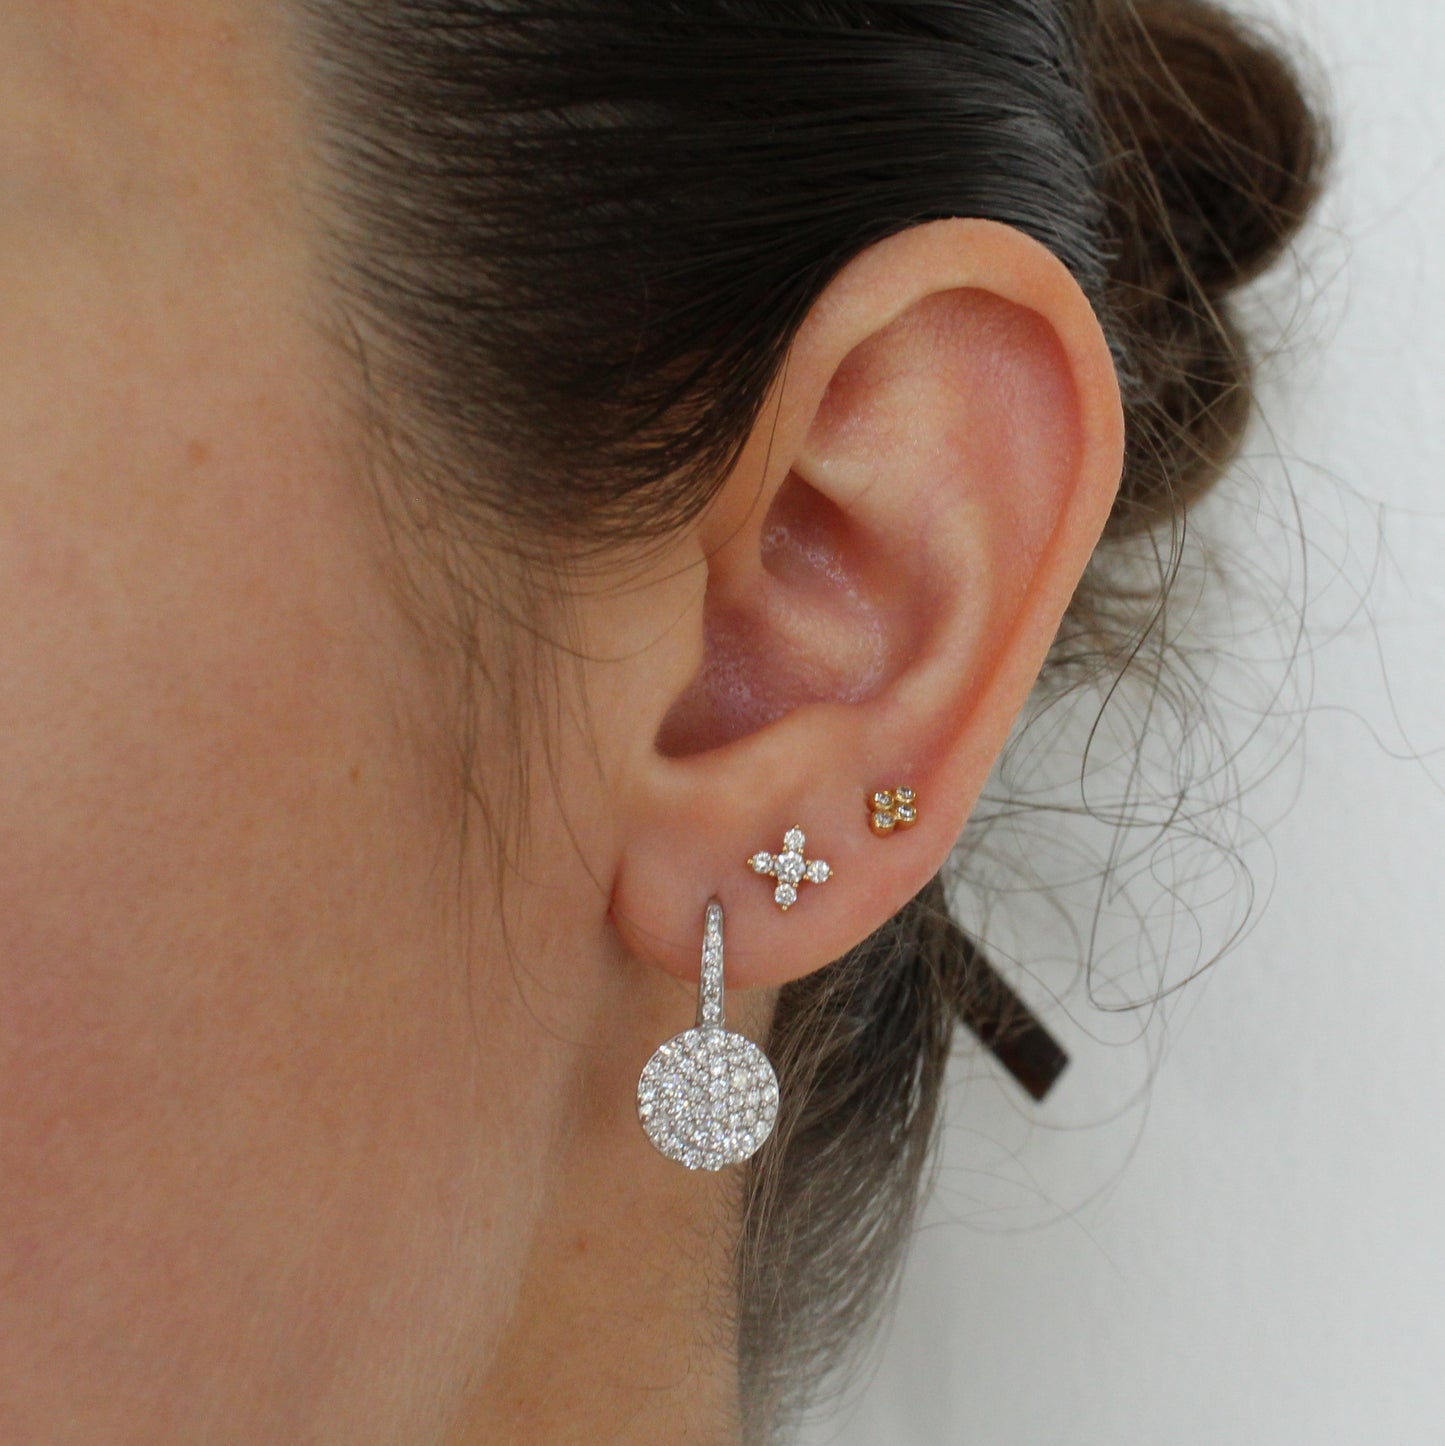 Diamond X Stud Earrings